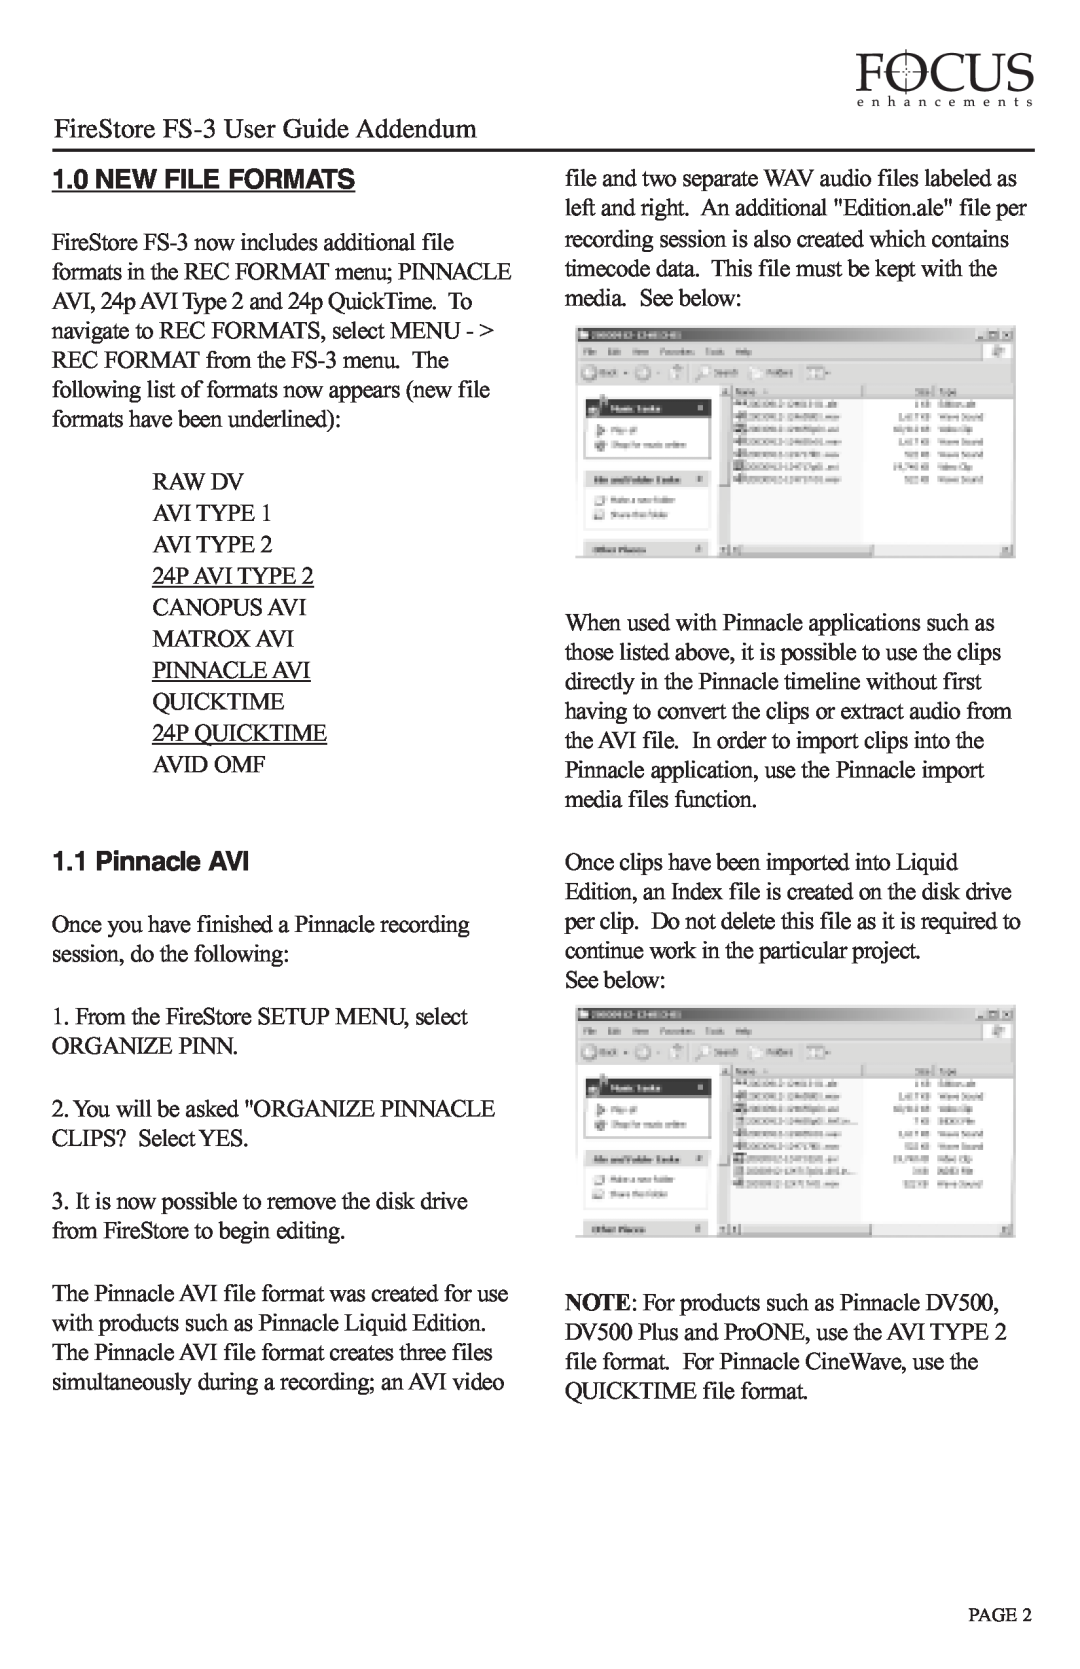 FOCUS Enhancements manual New File Formats, Pinnacle AVI, FireStore FS-3 User Guide Addendum 